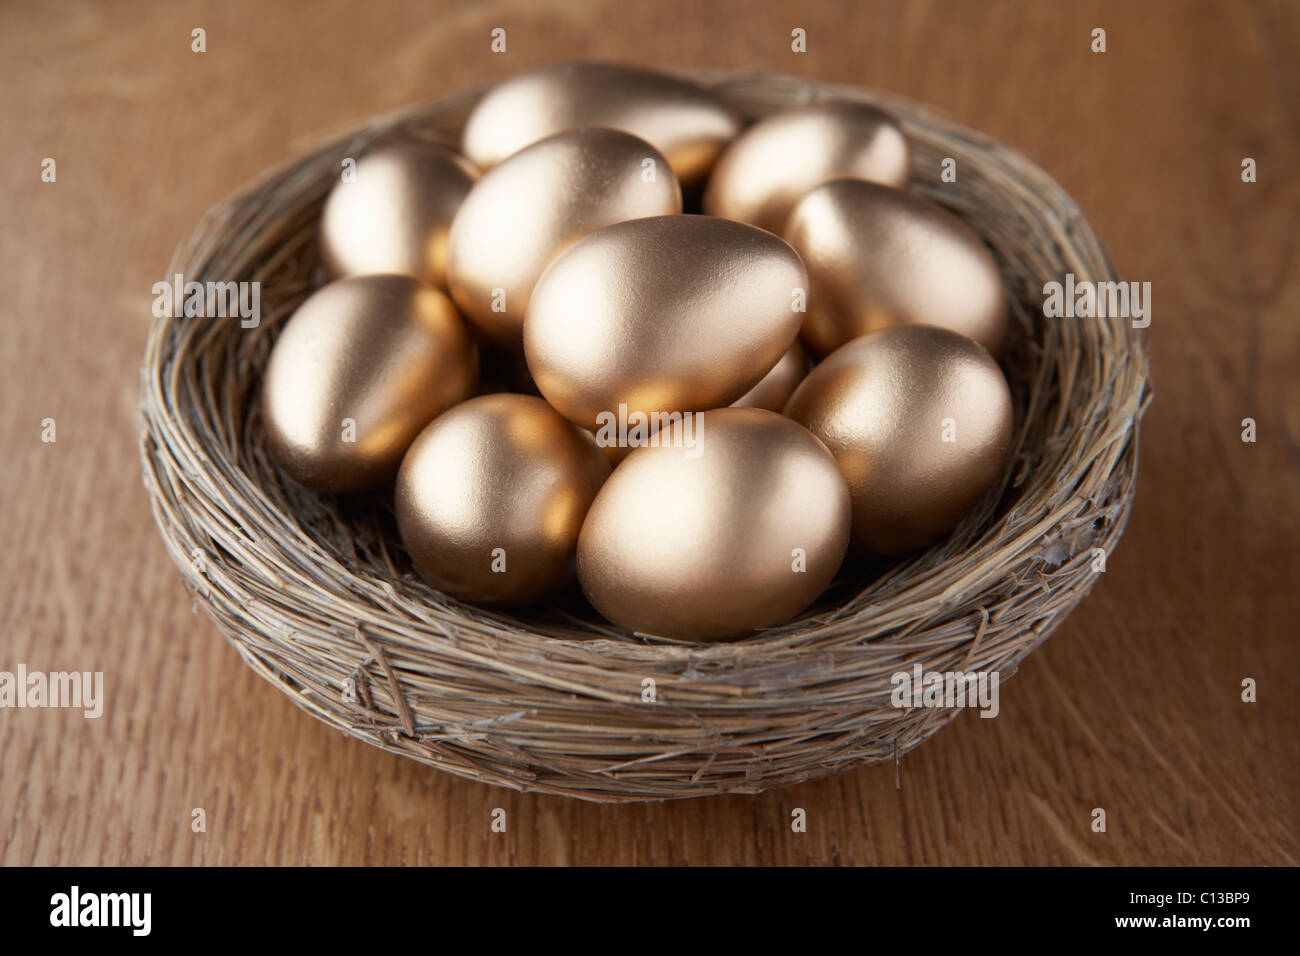 A basket of golden eggs Stock Photo